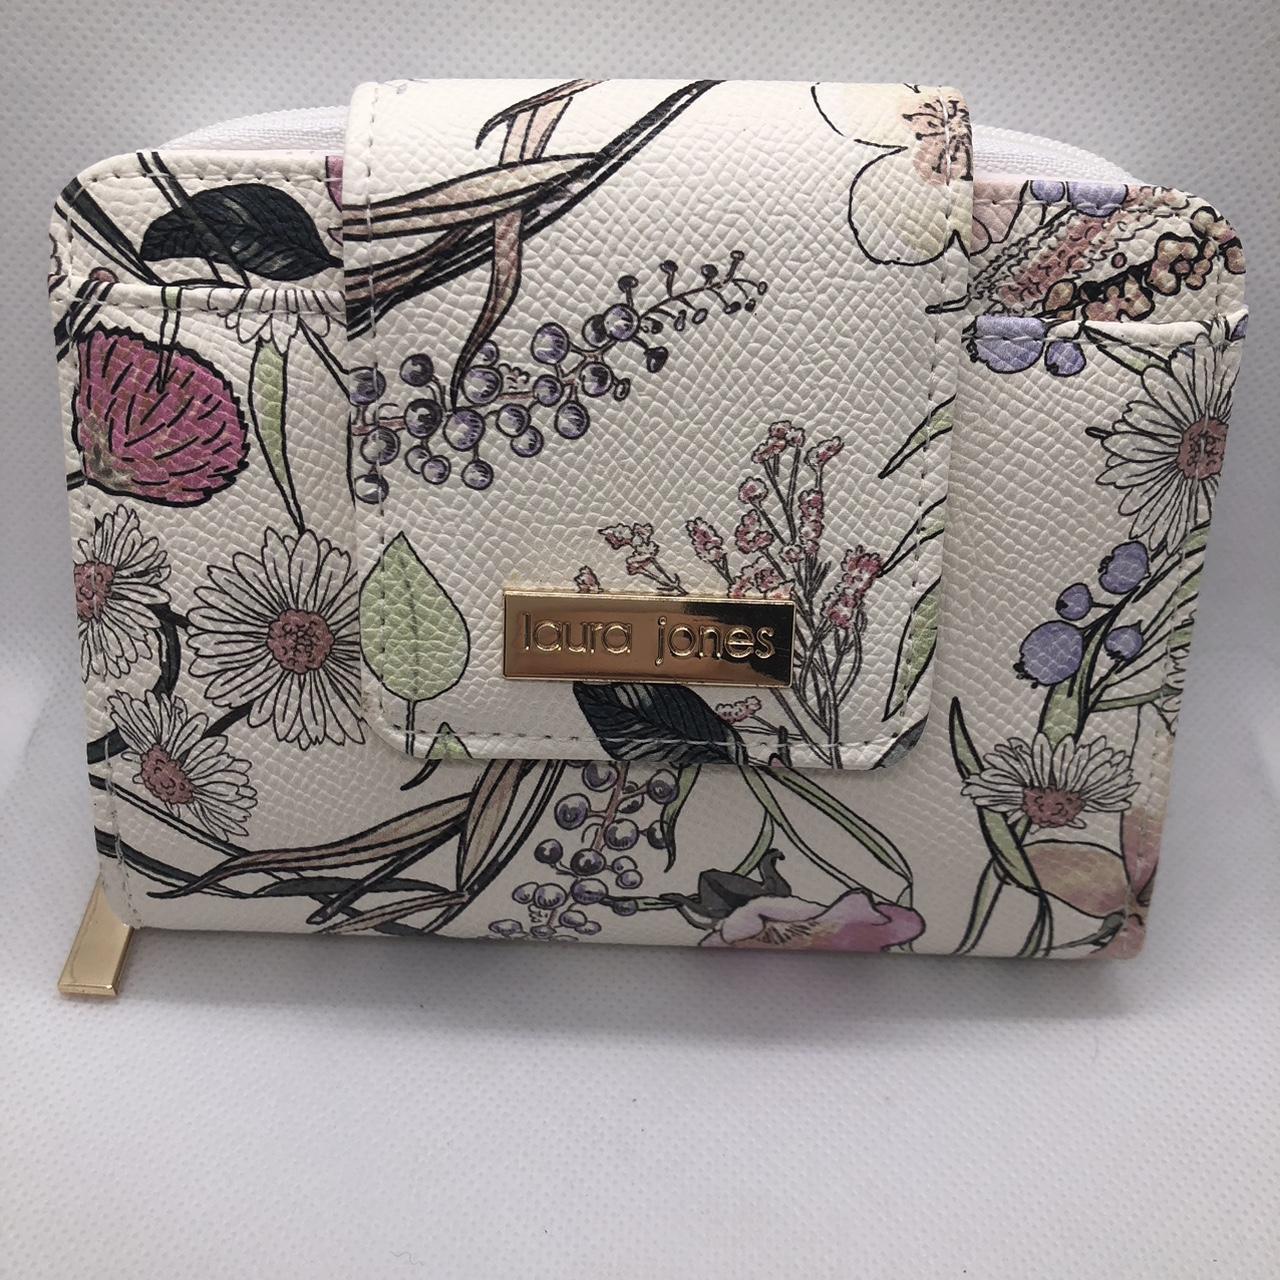 LAURA JONES Straw Box Bag | eBay